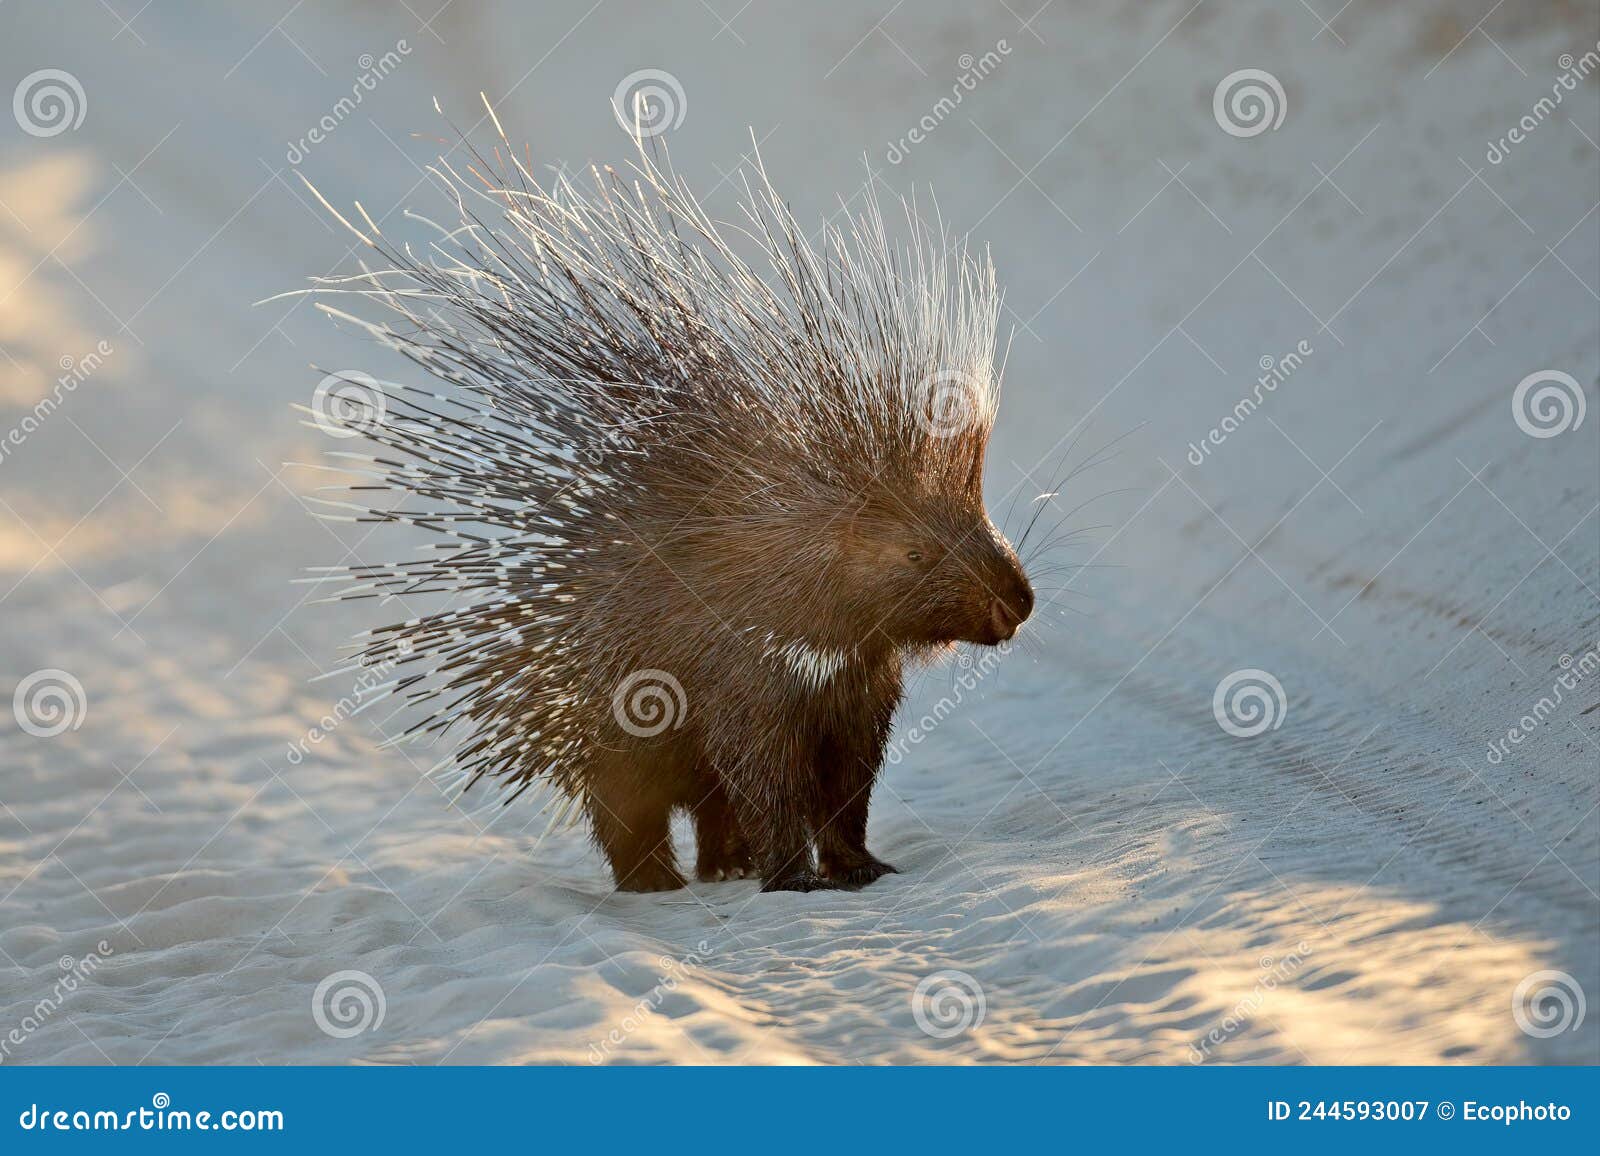 alert cape porcupine with erect quills